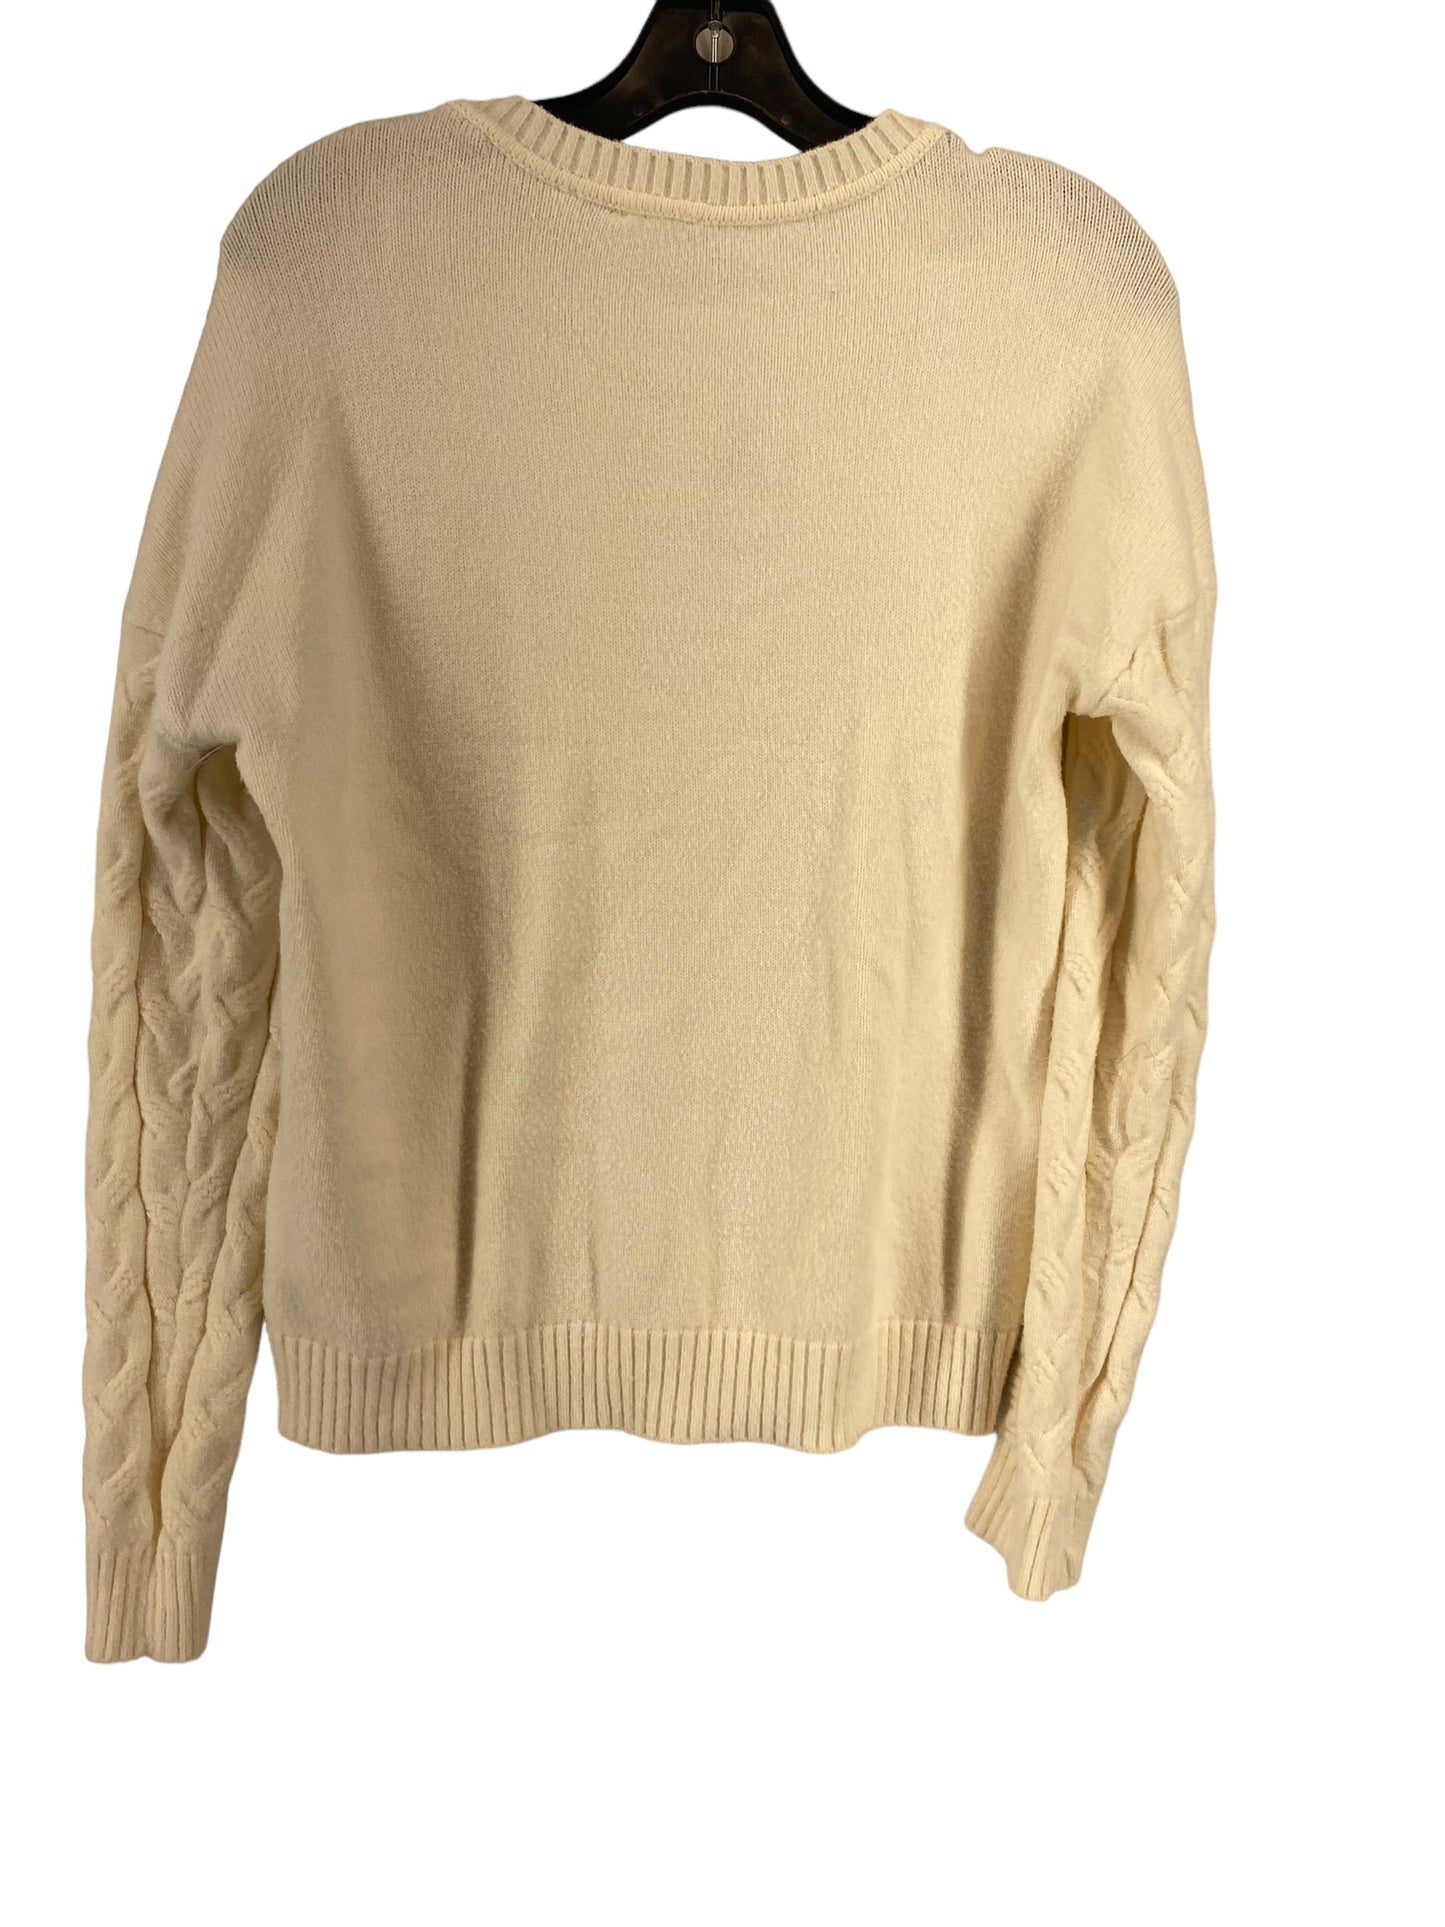 Cream Sweater Cyrus Knits, Size S